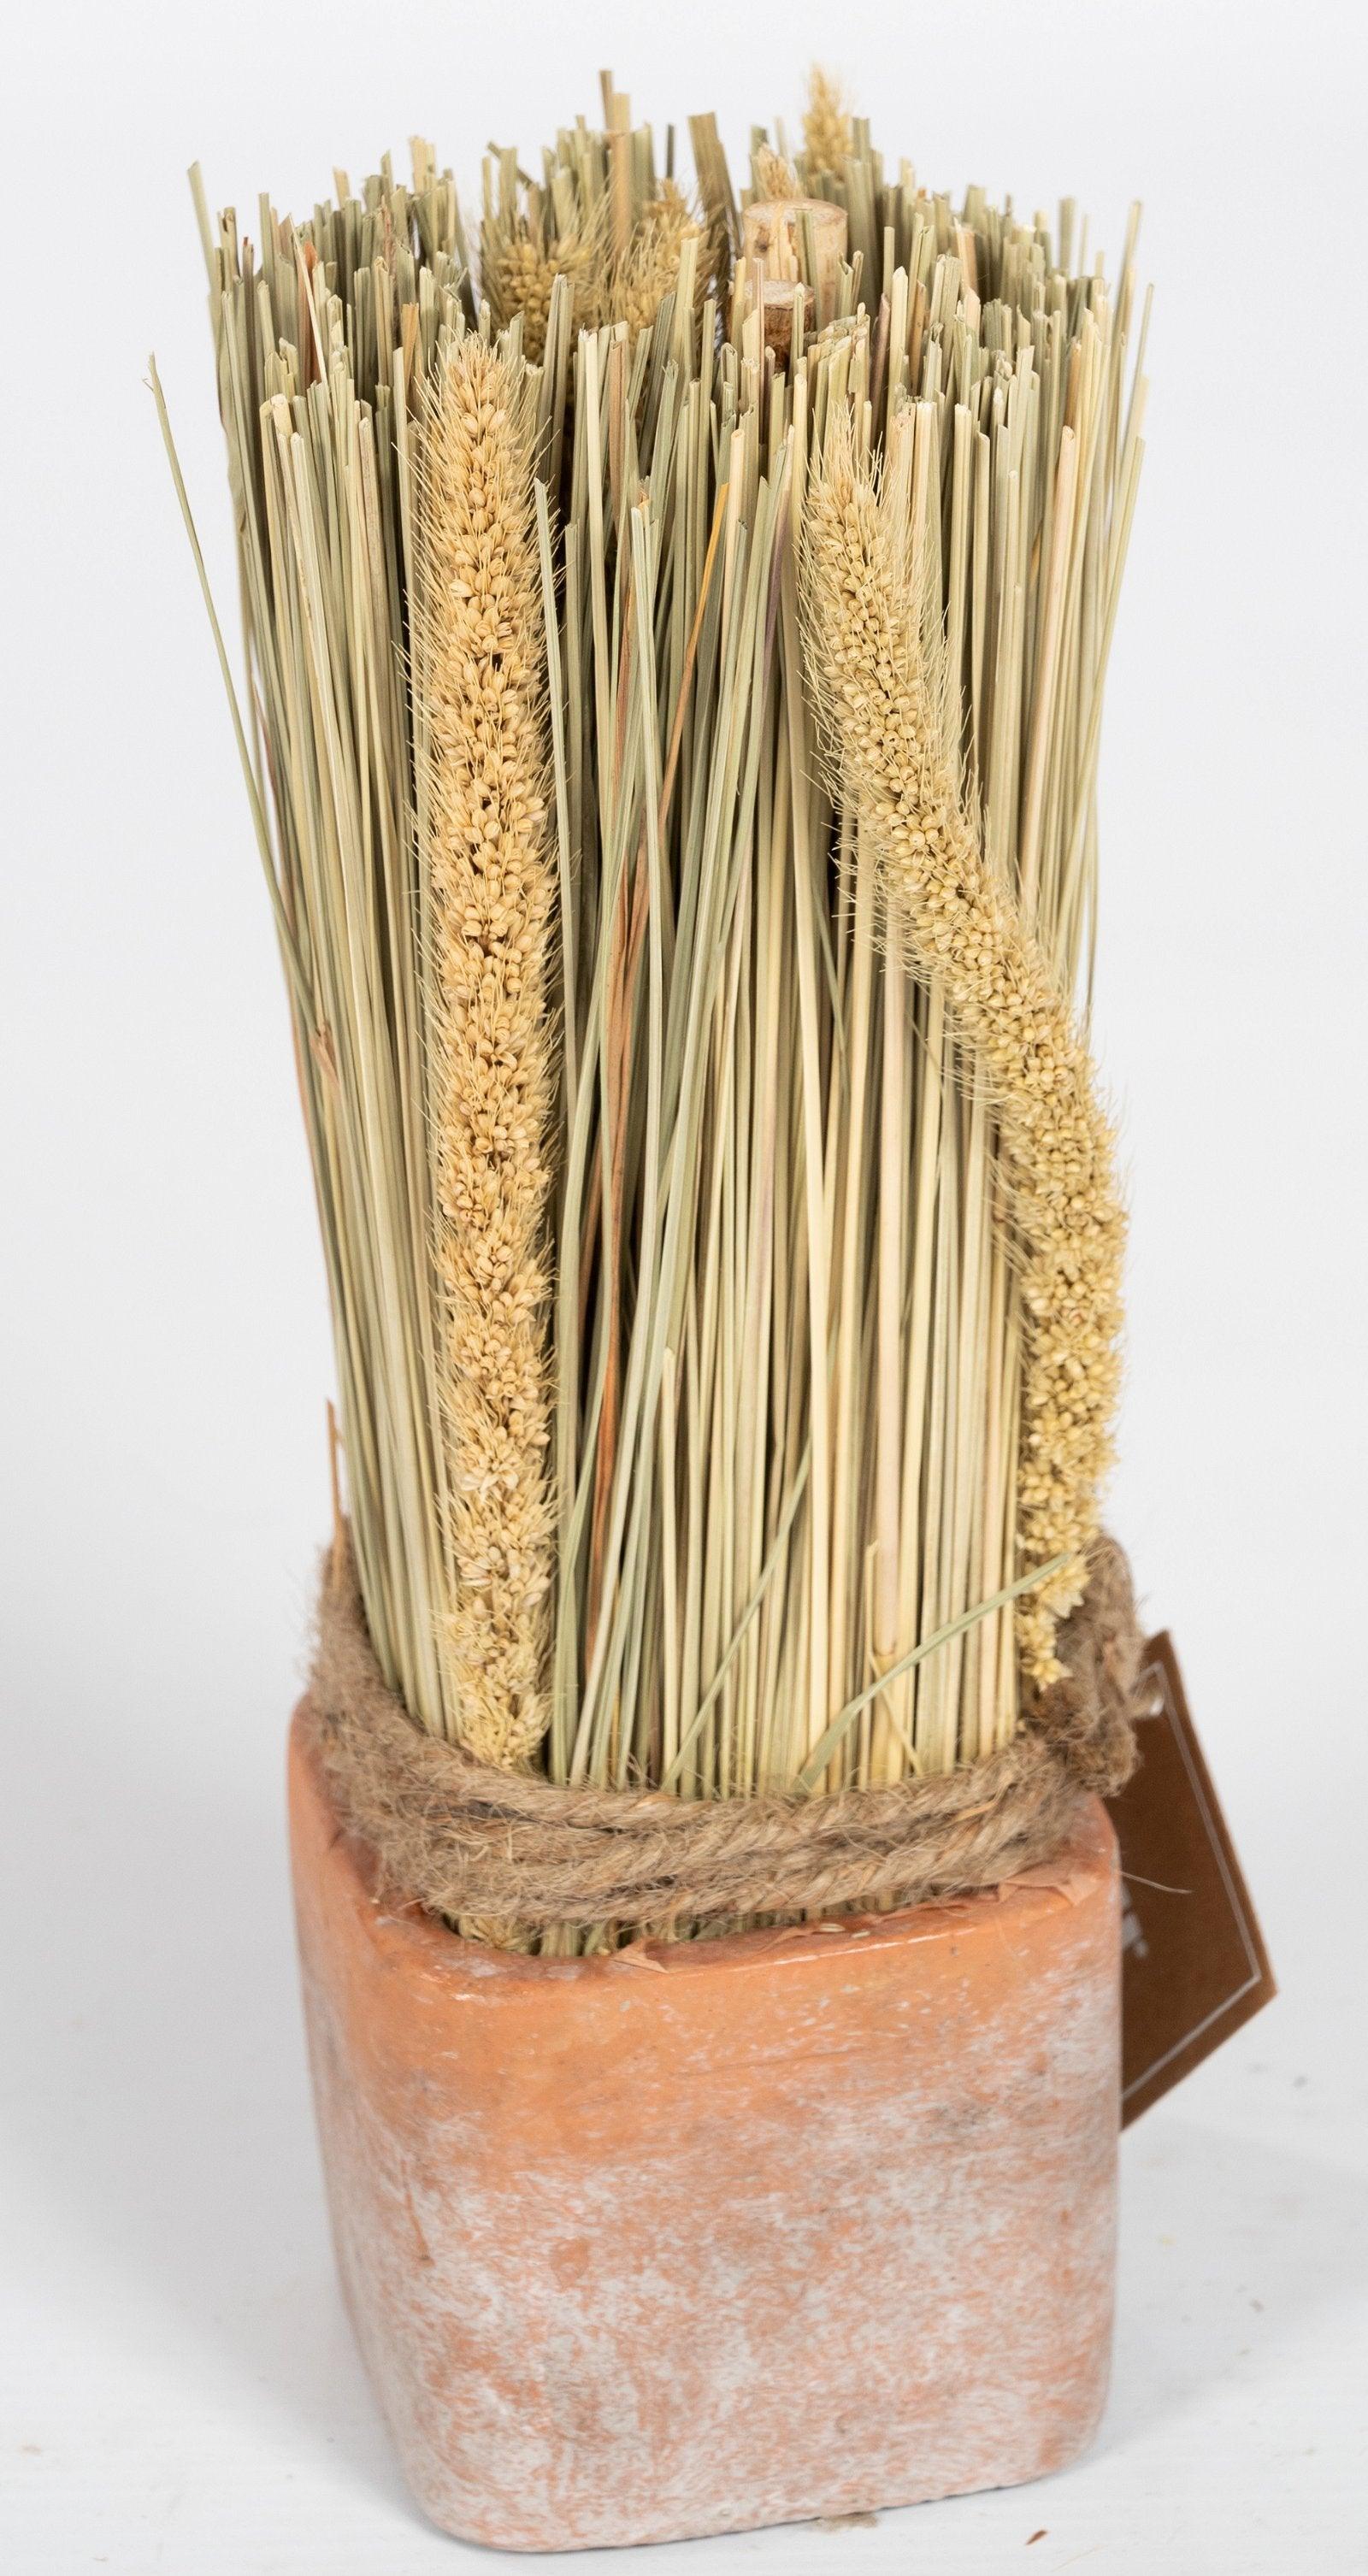 View Corn Dried Grass Bouquet in Terracotta Pot information